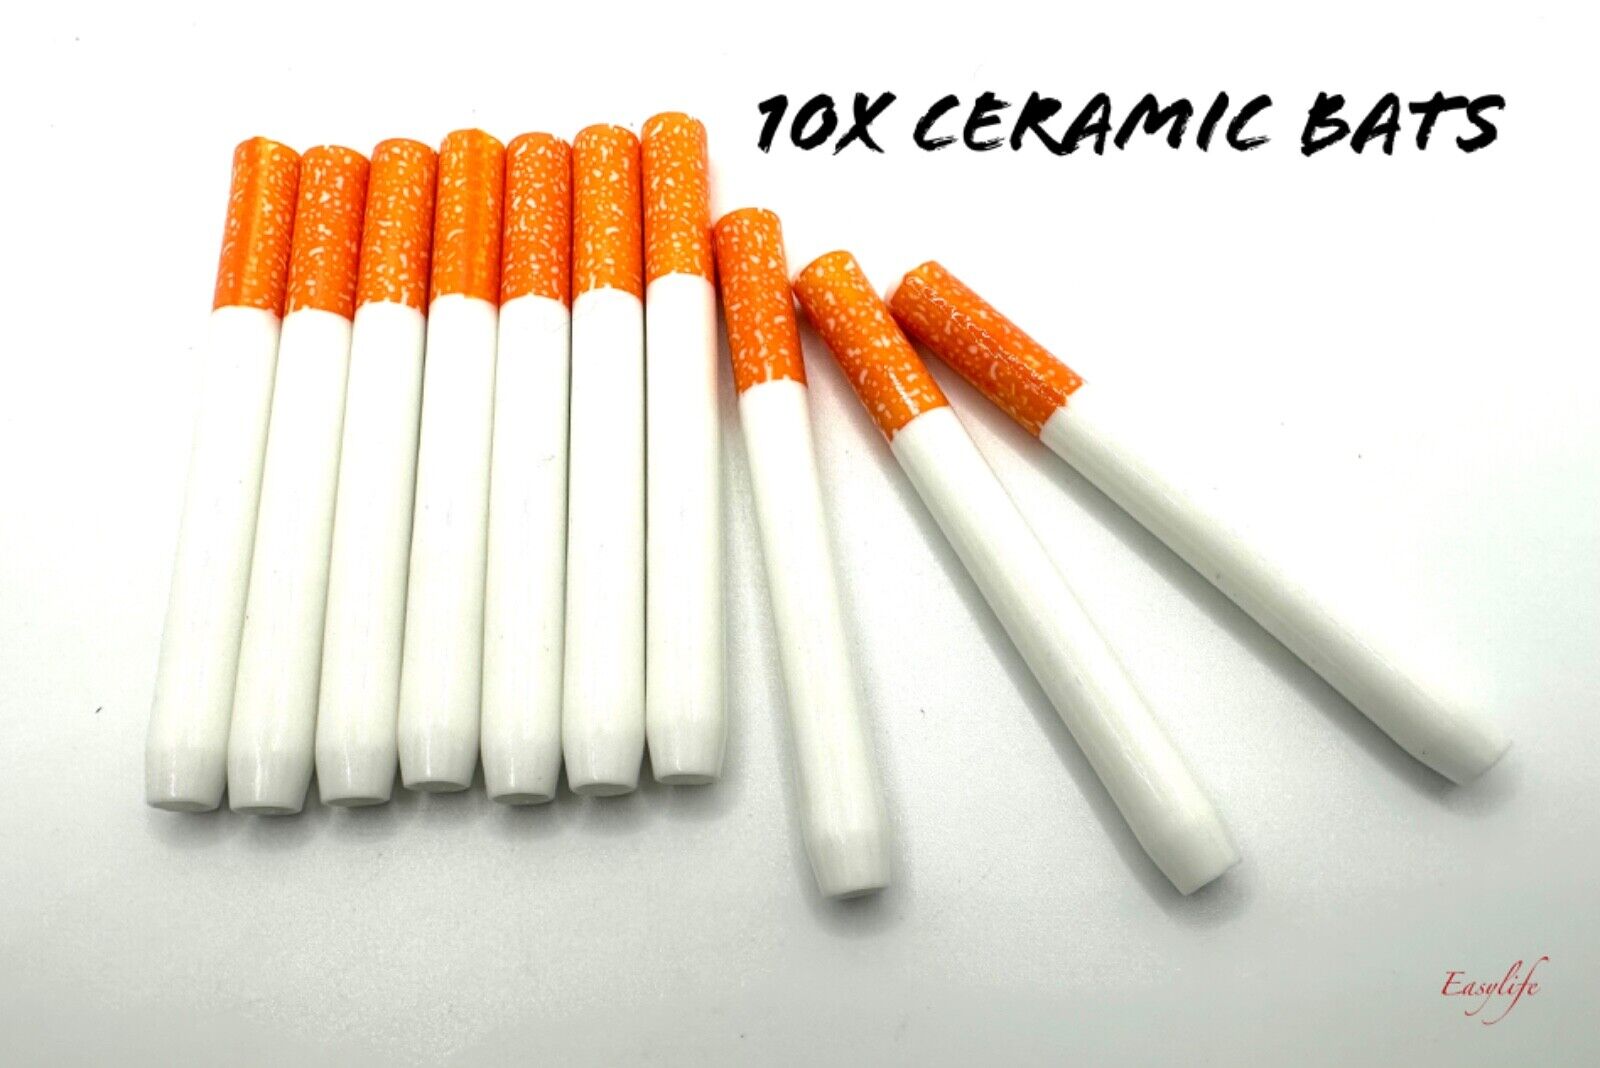 10X CERAMIC Bat Cigarette Dugout or 1 Hitter For Tobacco